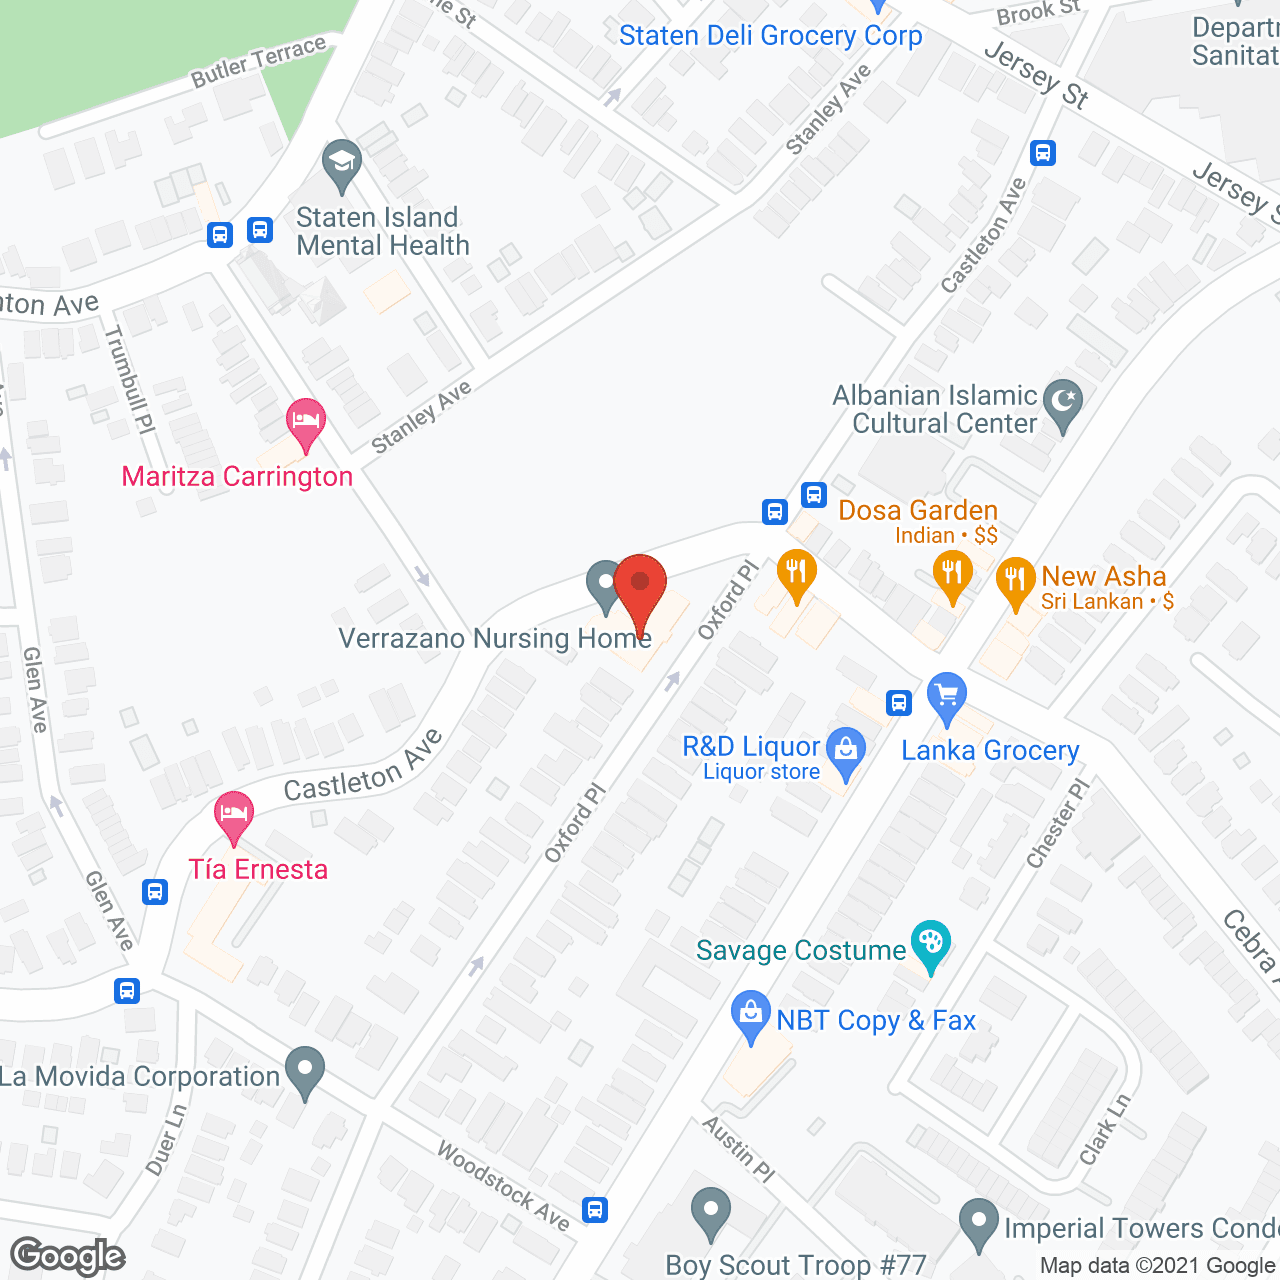 Verrazano Nursing Home in google map